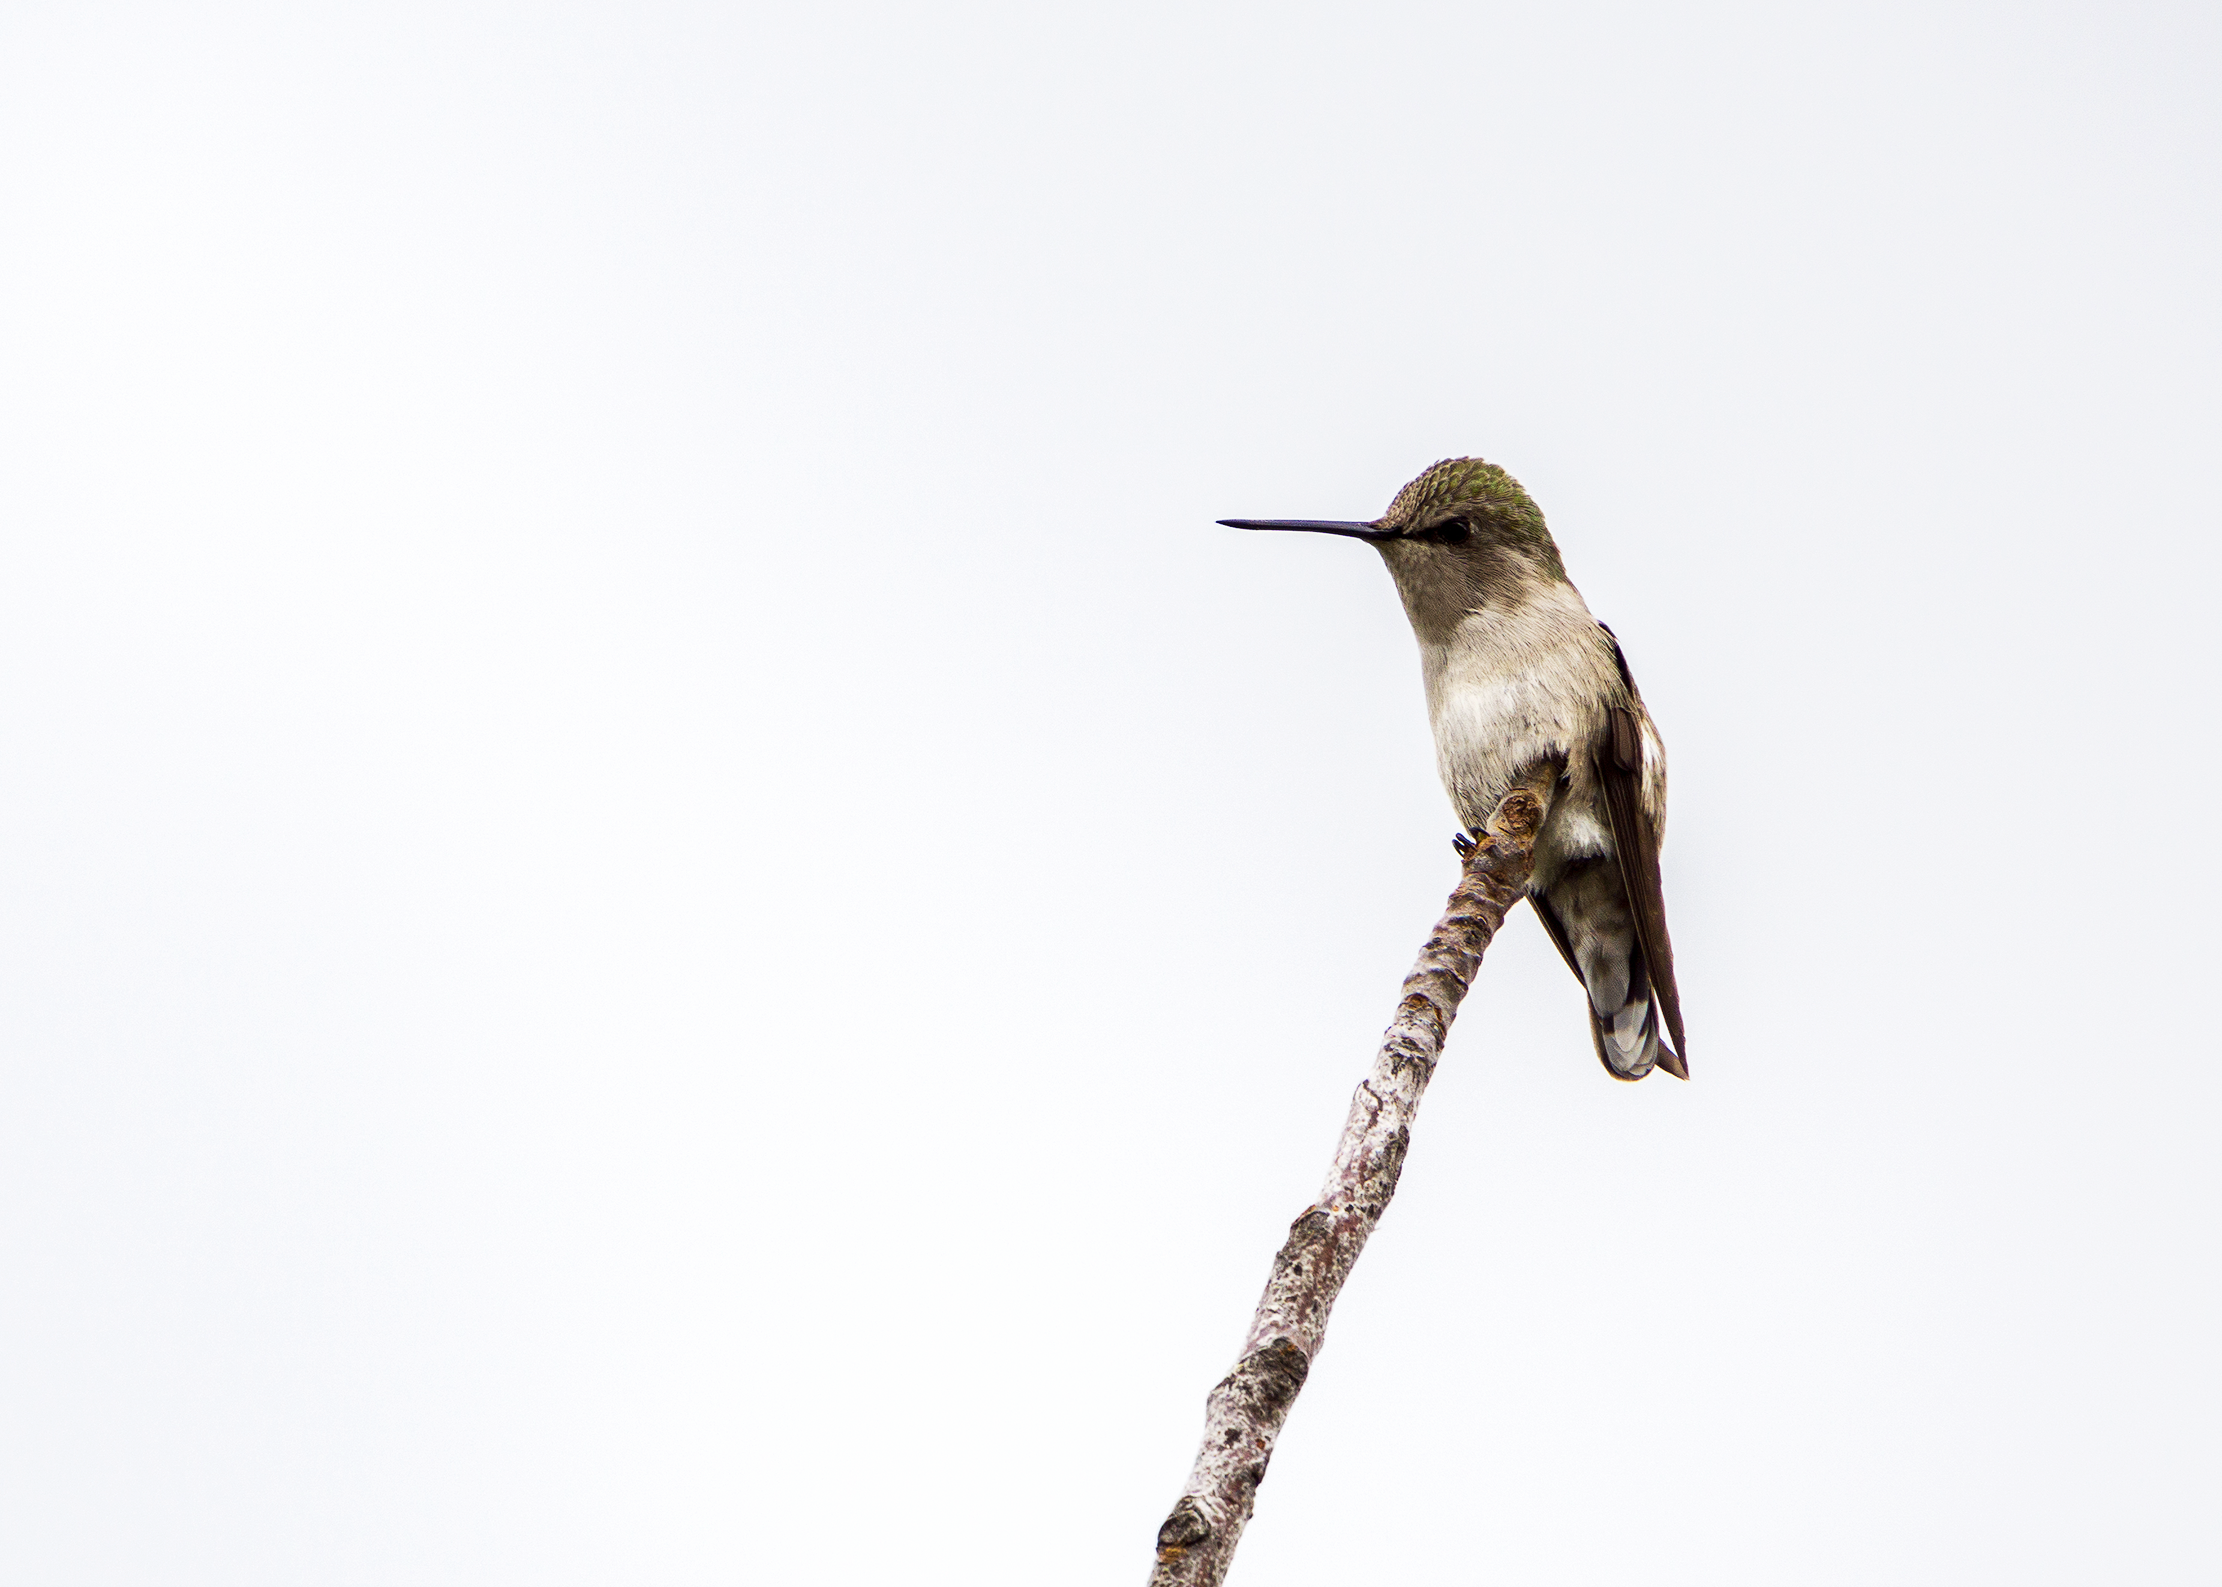 Mother Hummingbird